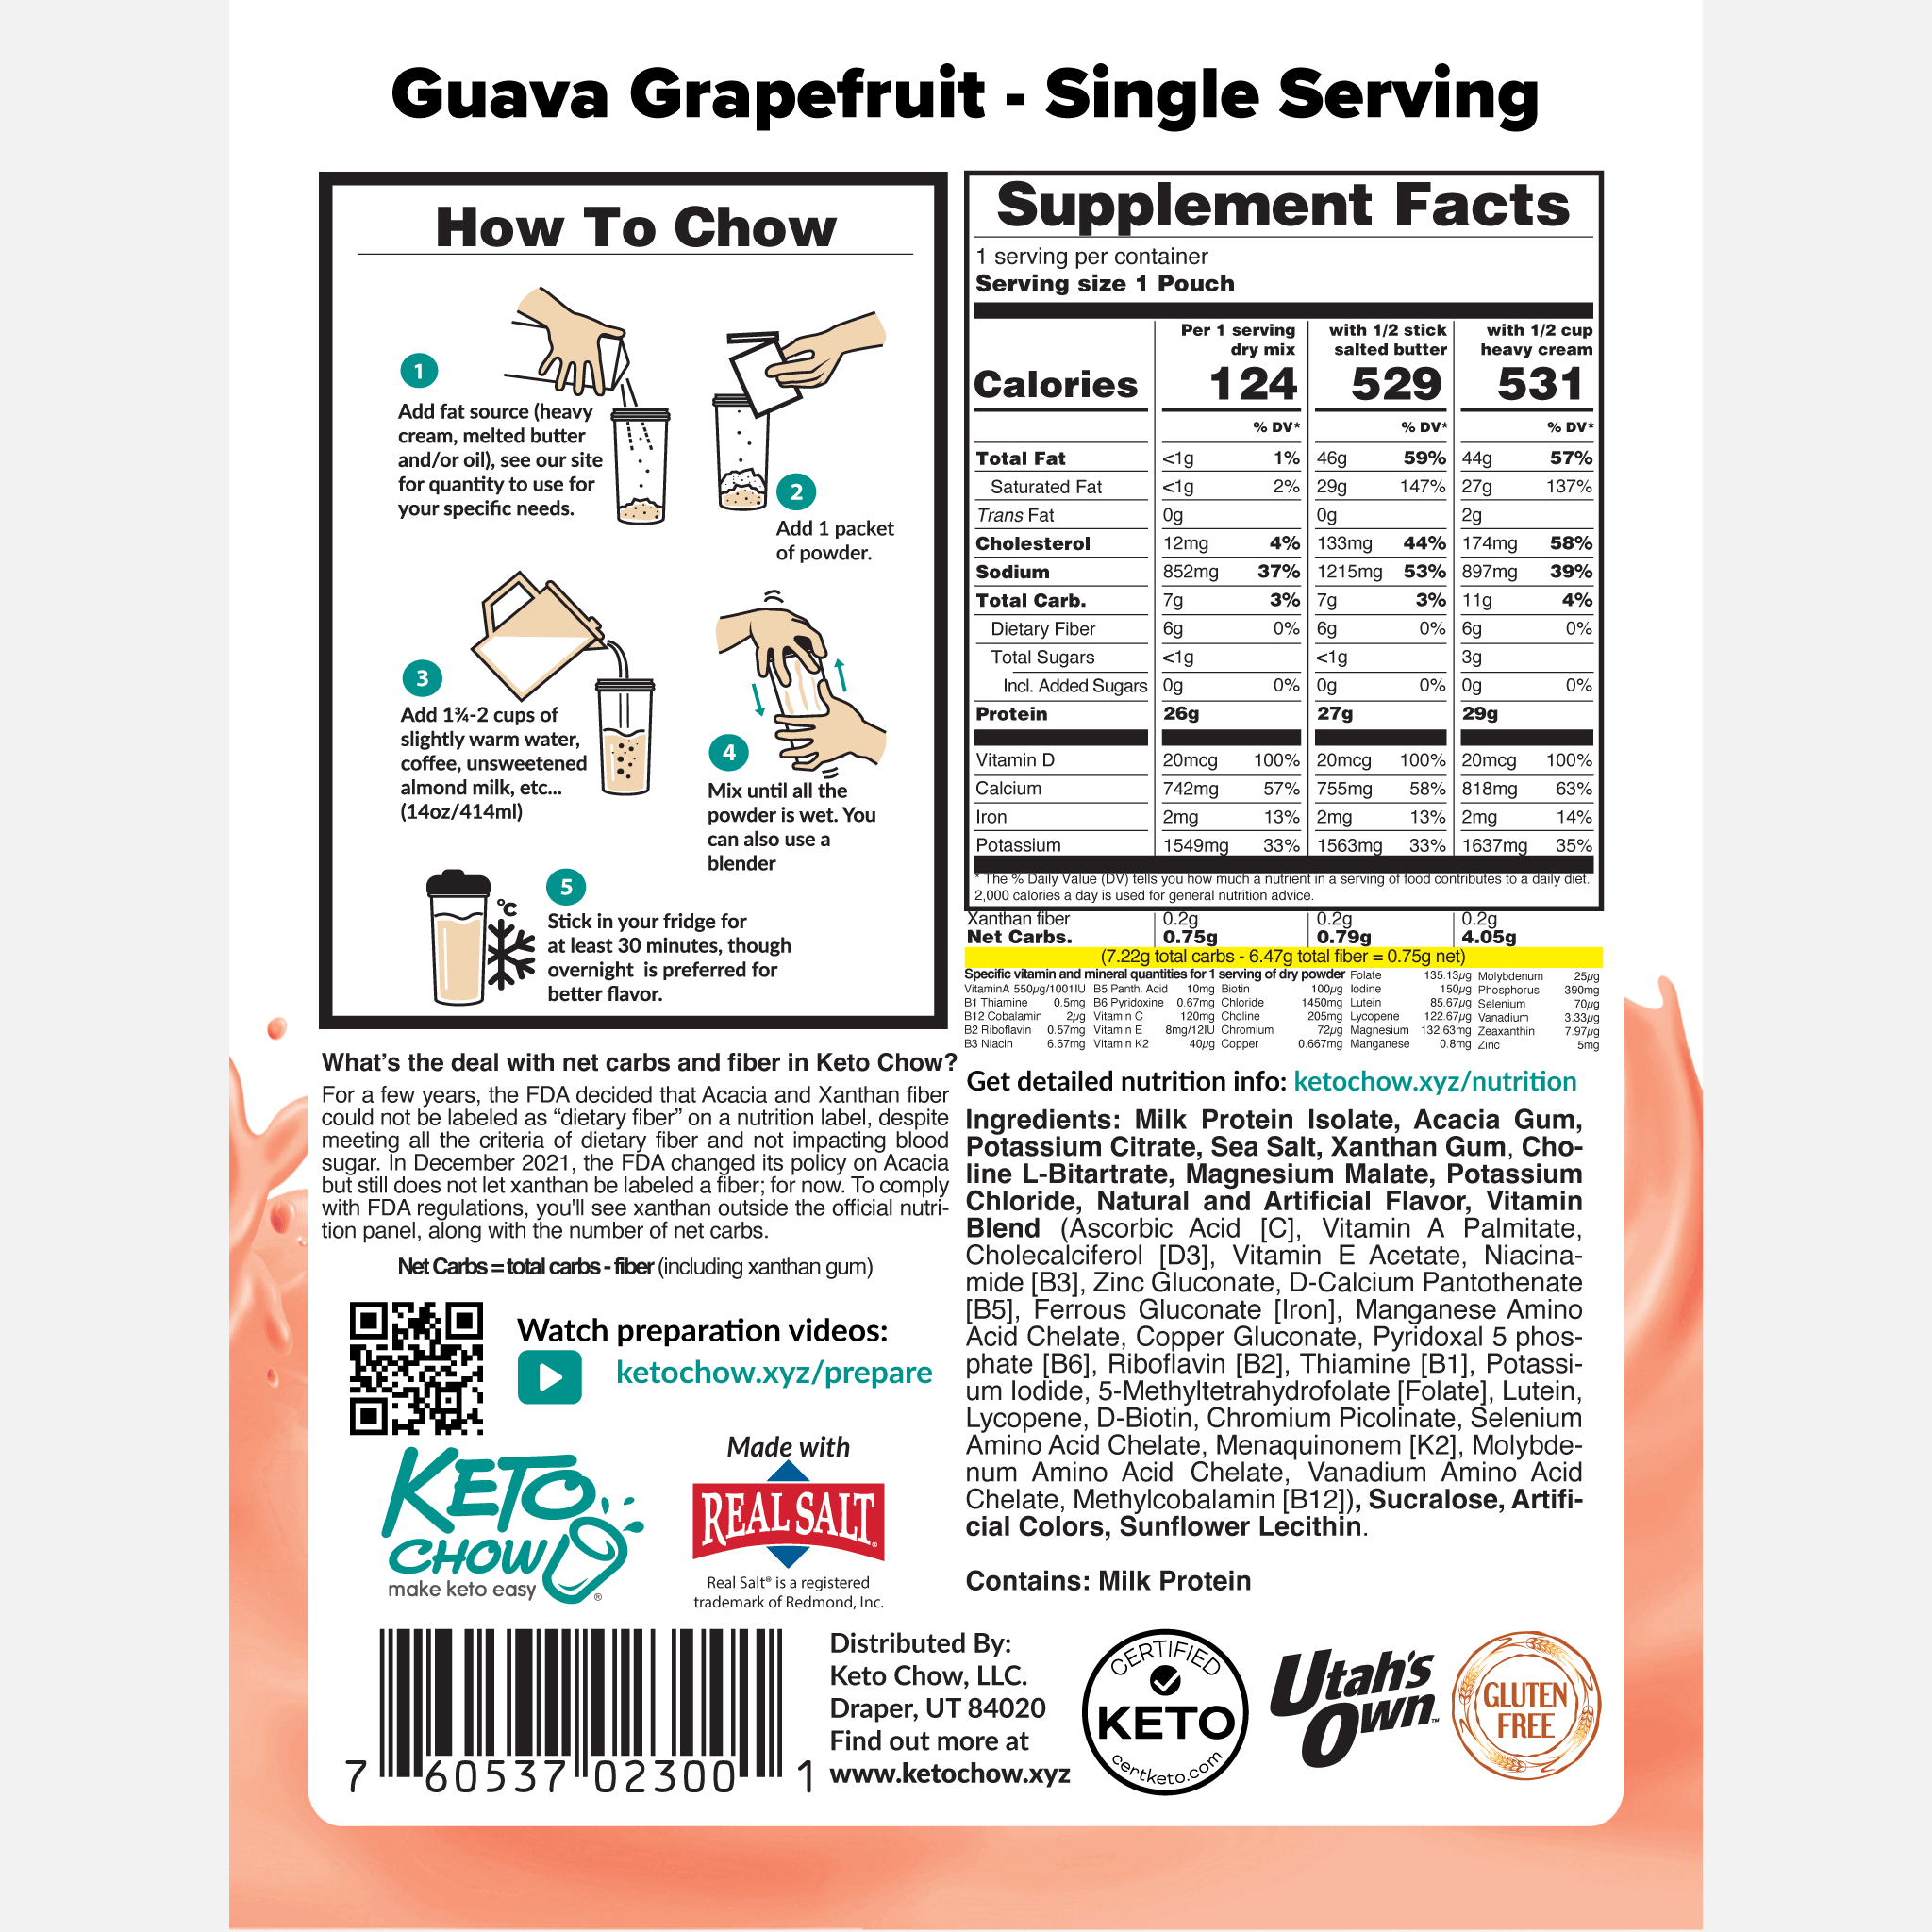 Guava Grapefruit single serving back of package